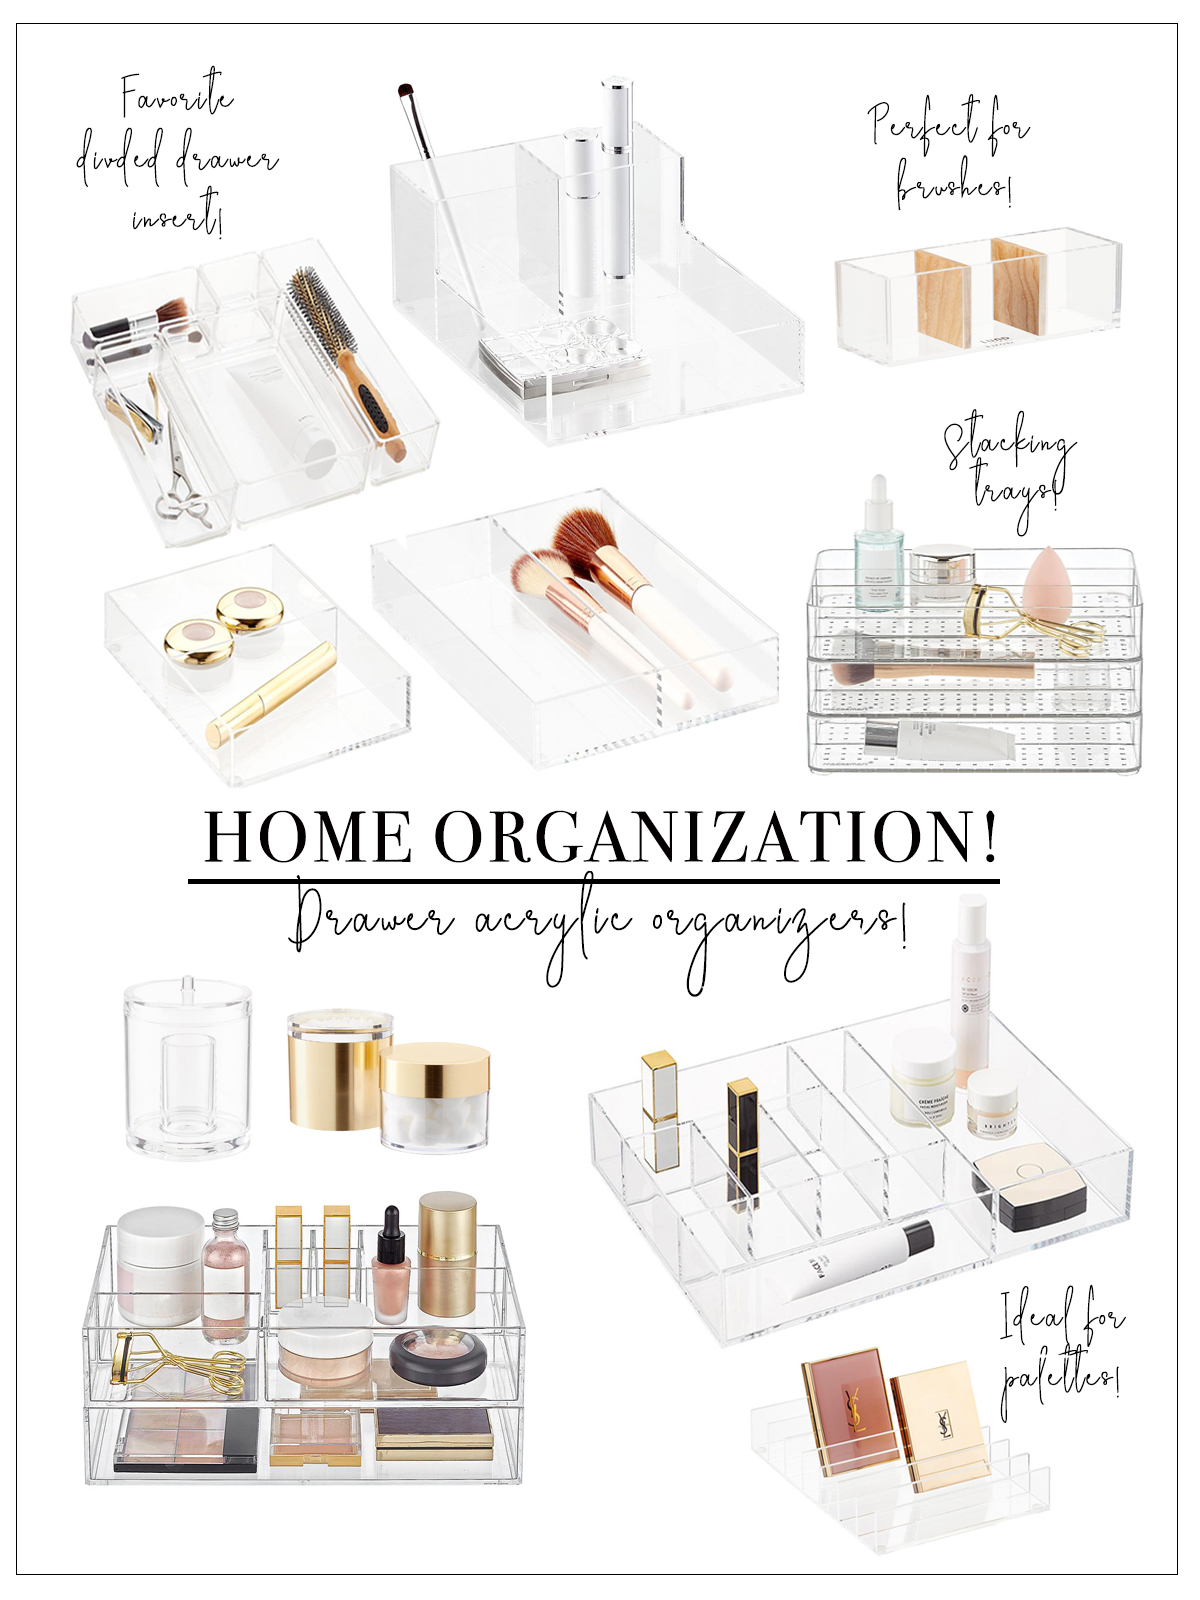 Home organization. Drawer acrylic organizers.